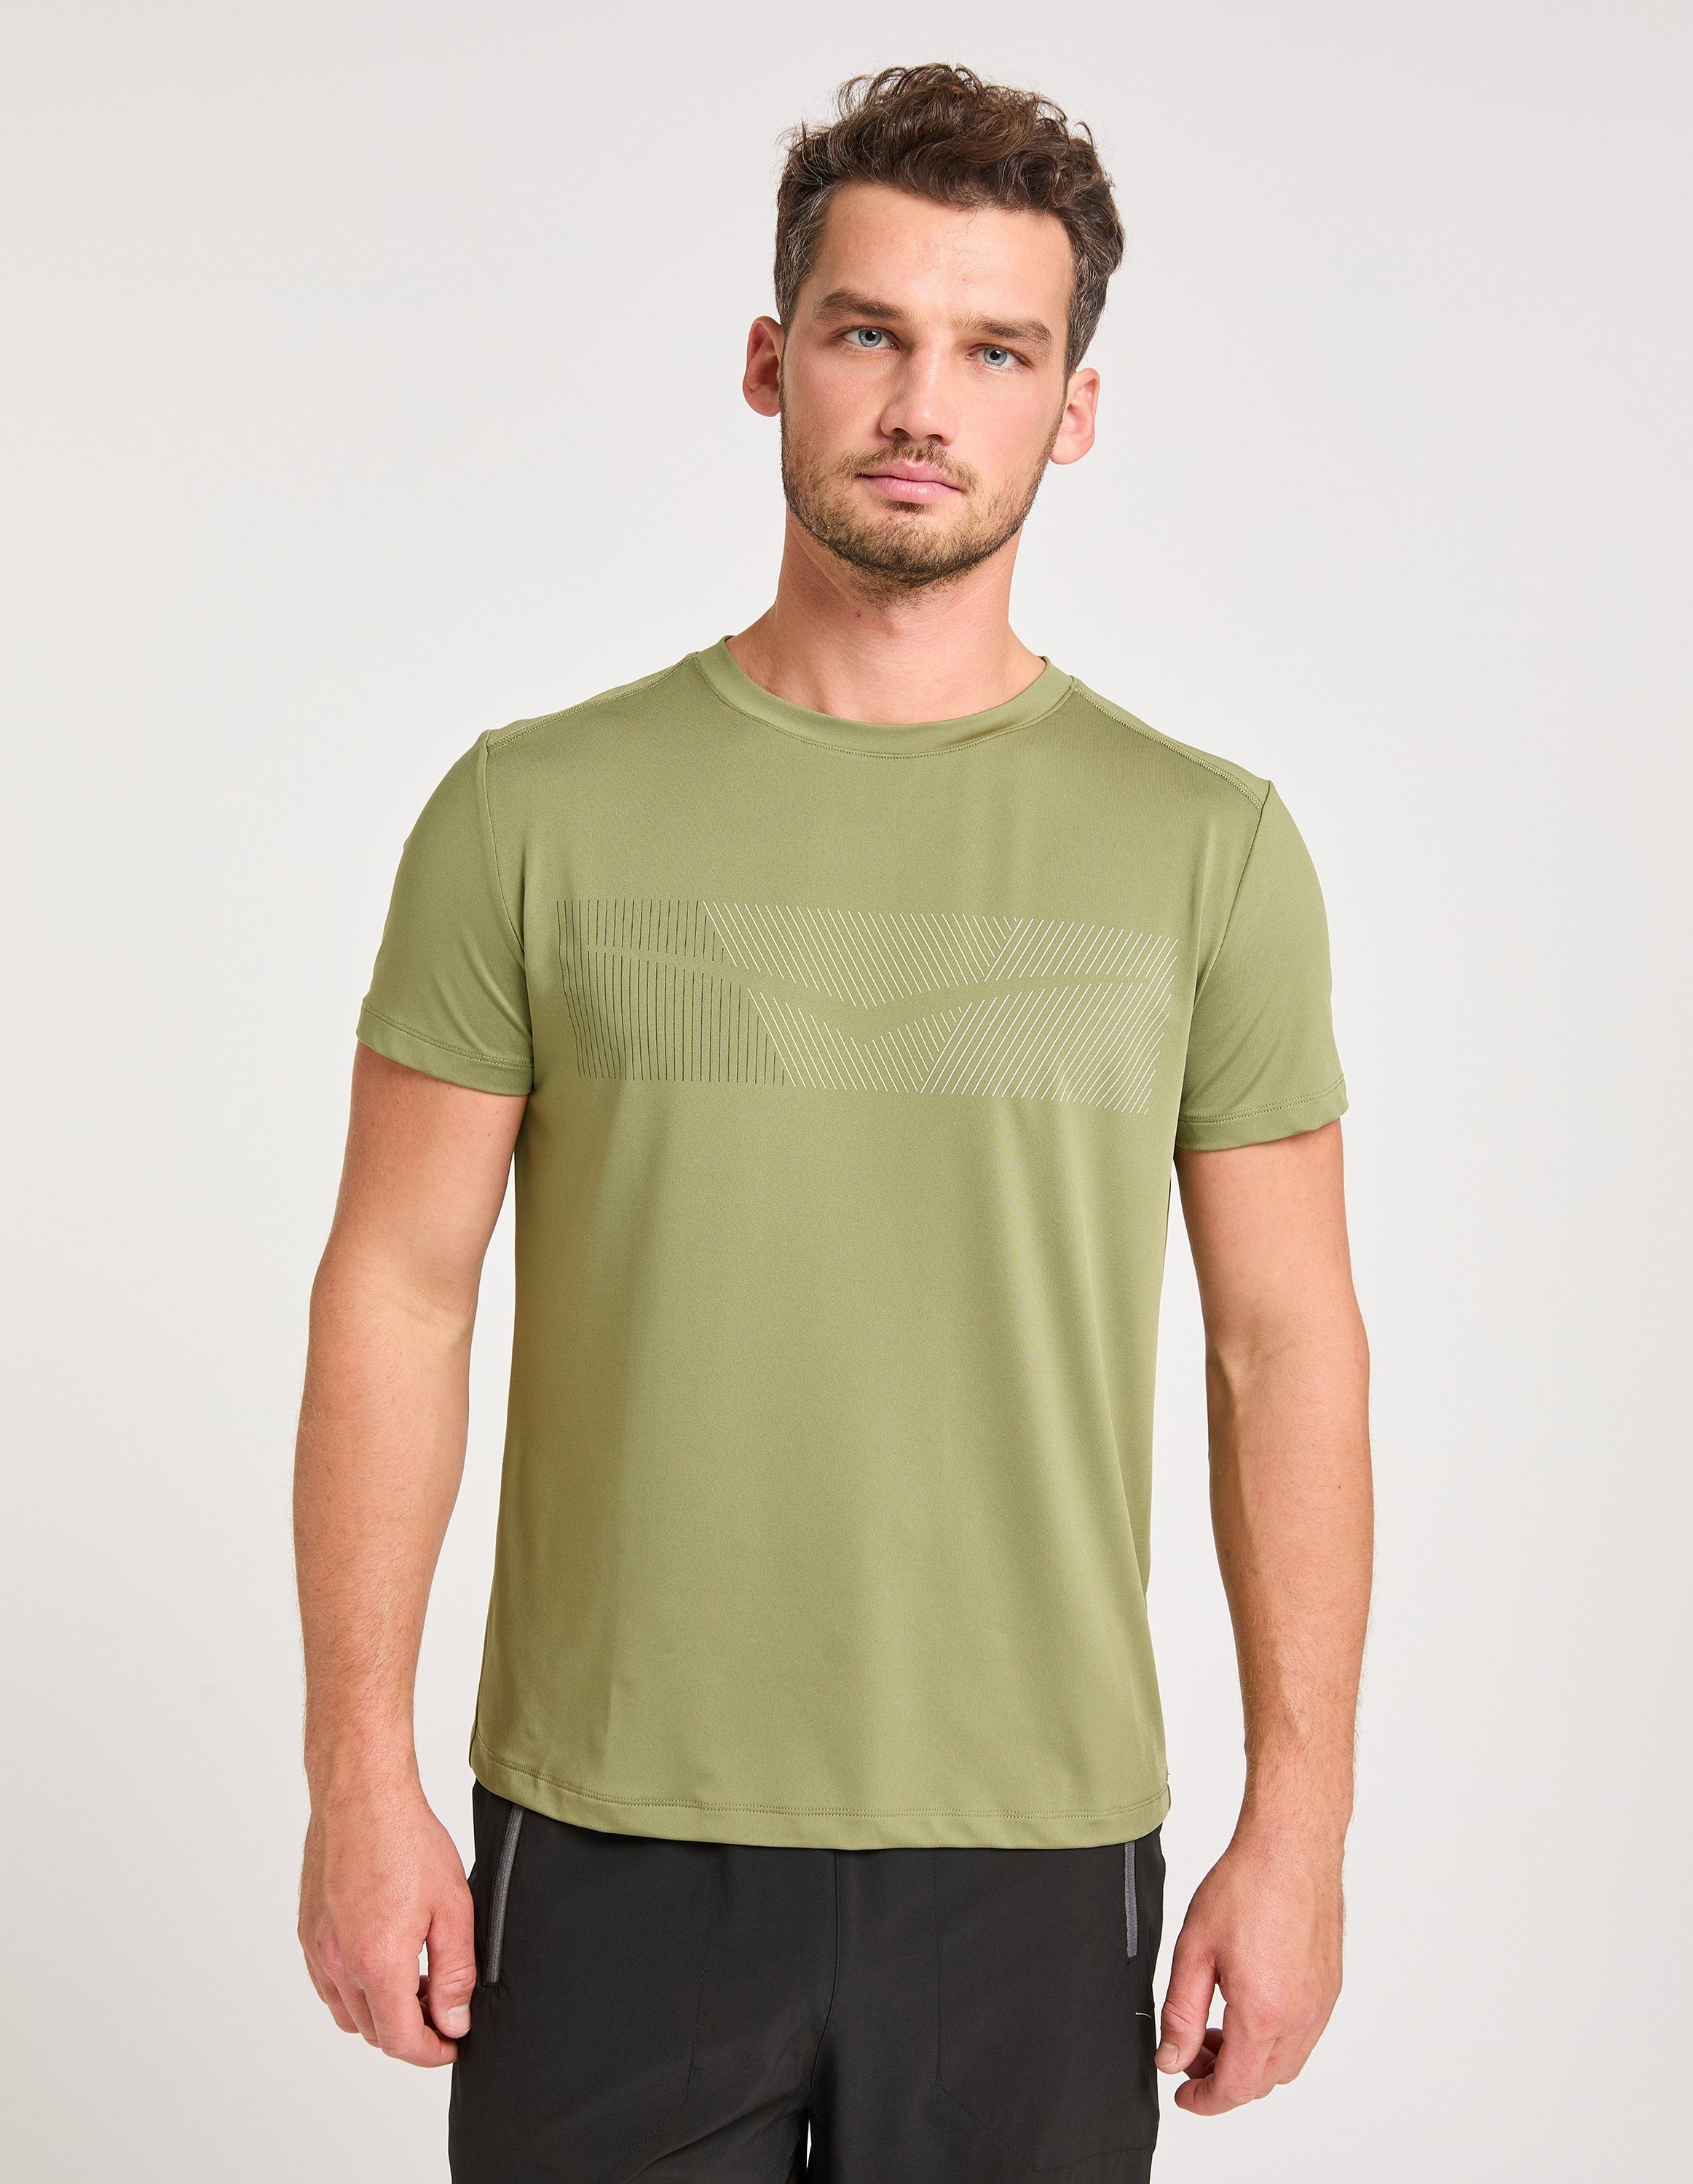 Men T-Shirt olive light Venice Beach VB T-Shirt HAYES